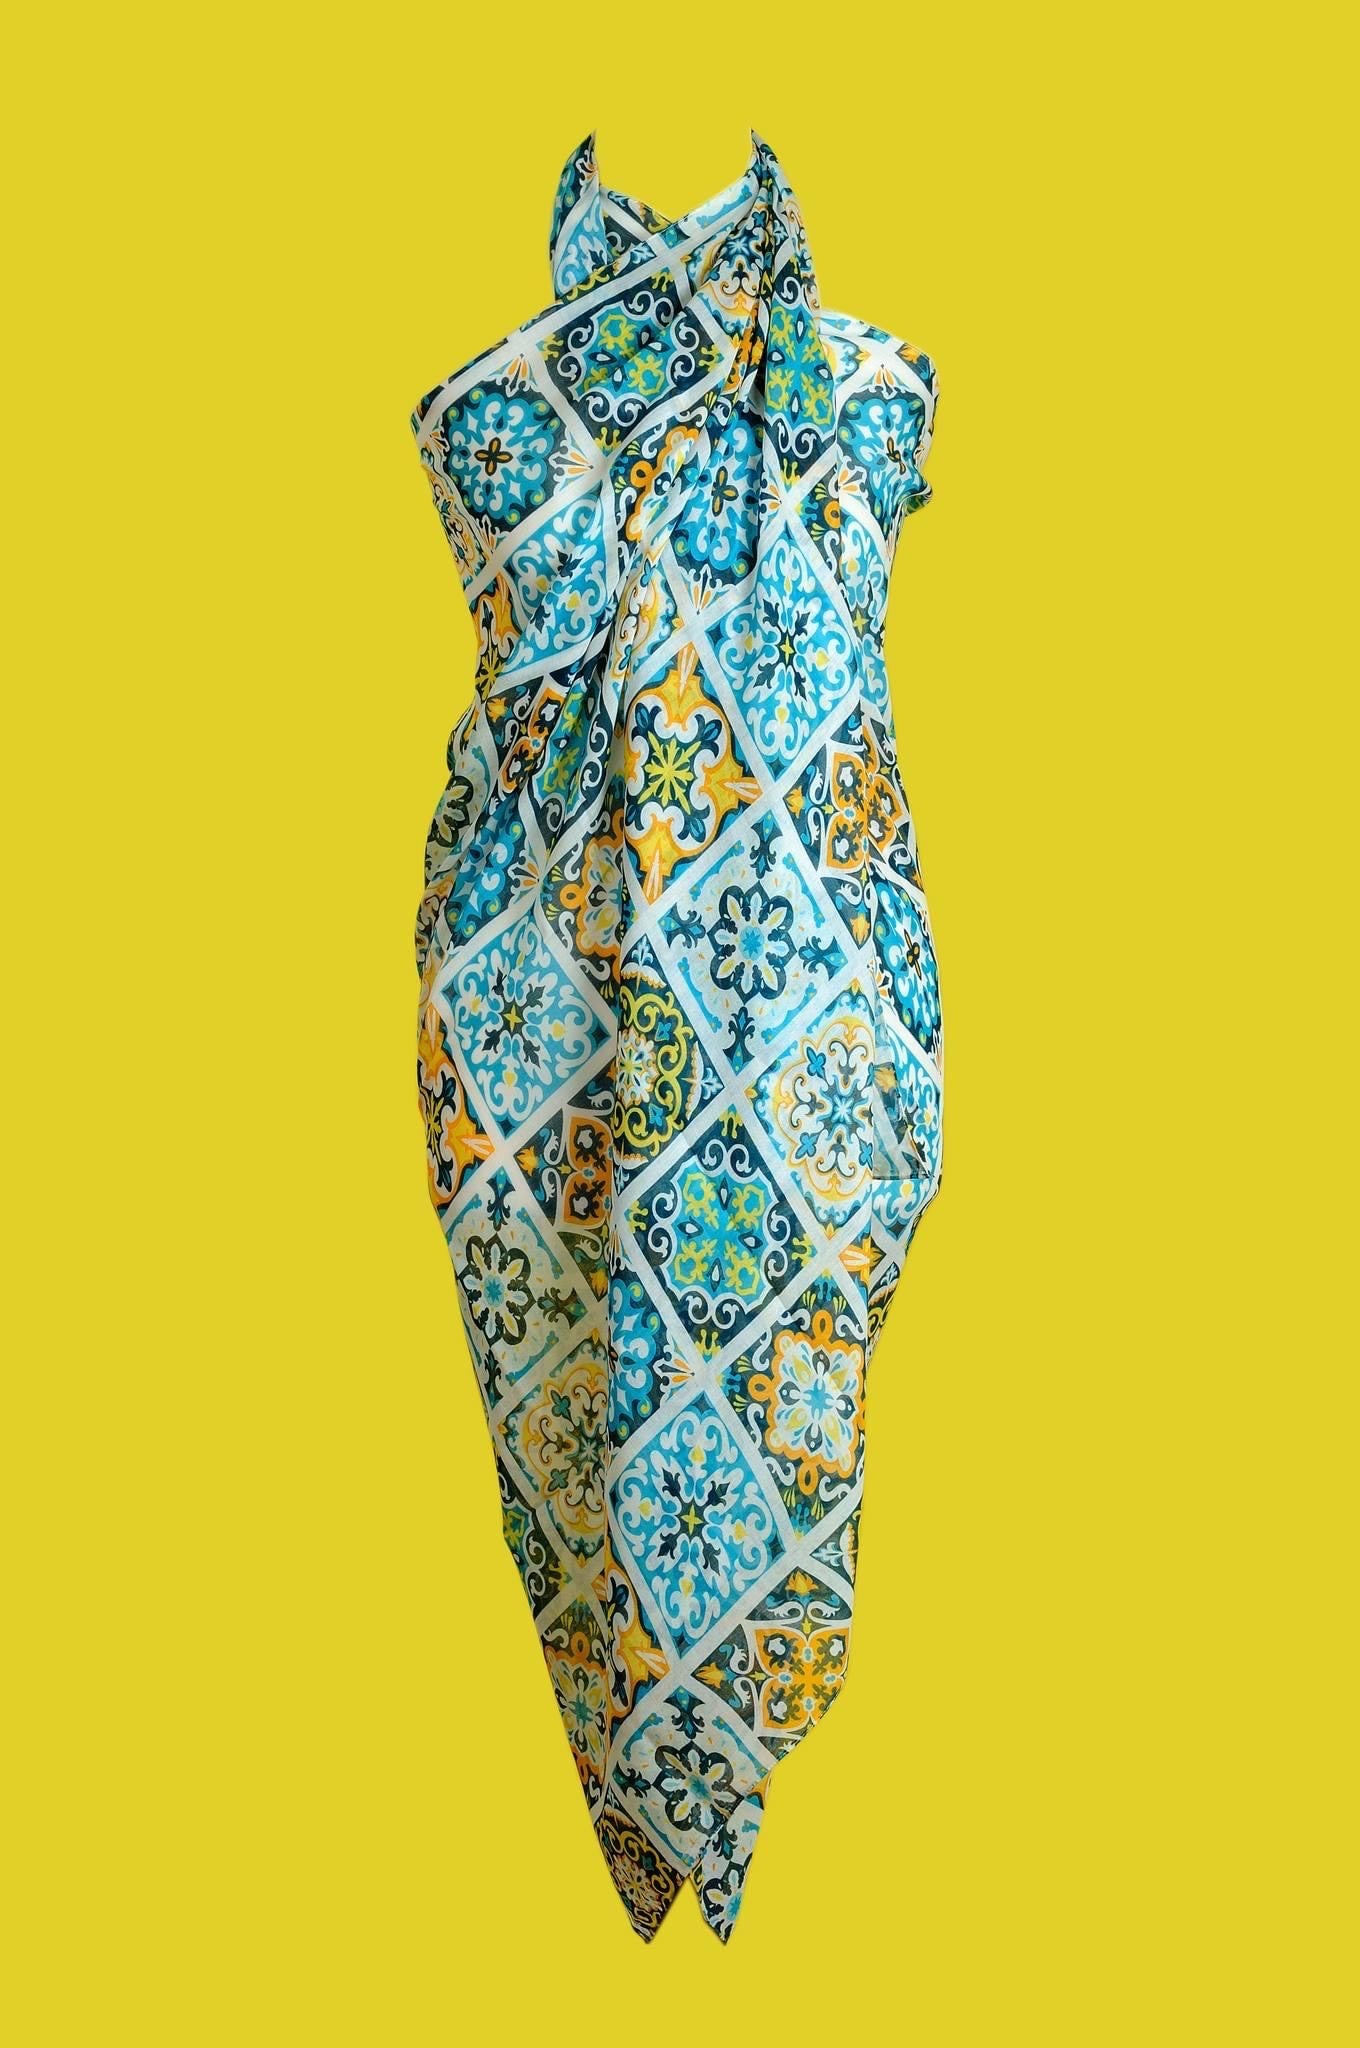 Shop The Latest Collection Of Oumnia By Nivine Maktabi Pareo Beach Wraps -Multi Tile Shawl Design In Lebanon